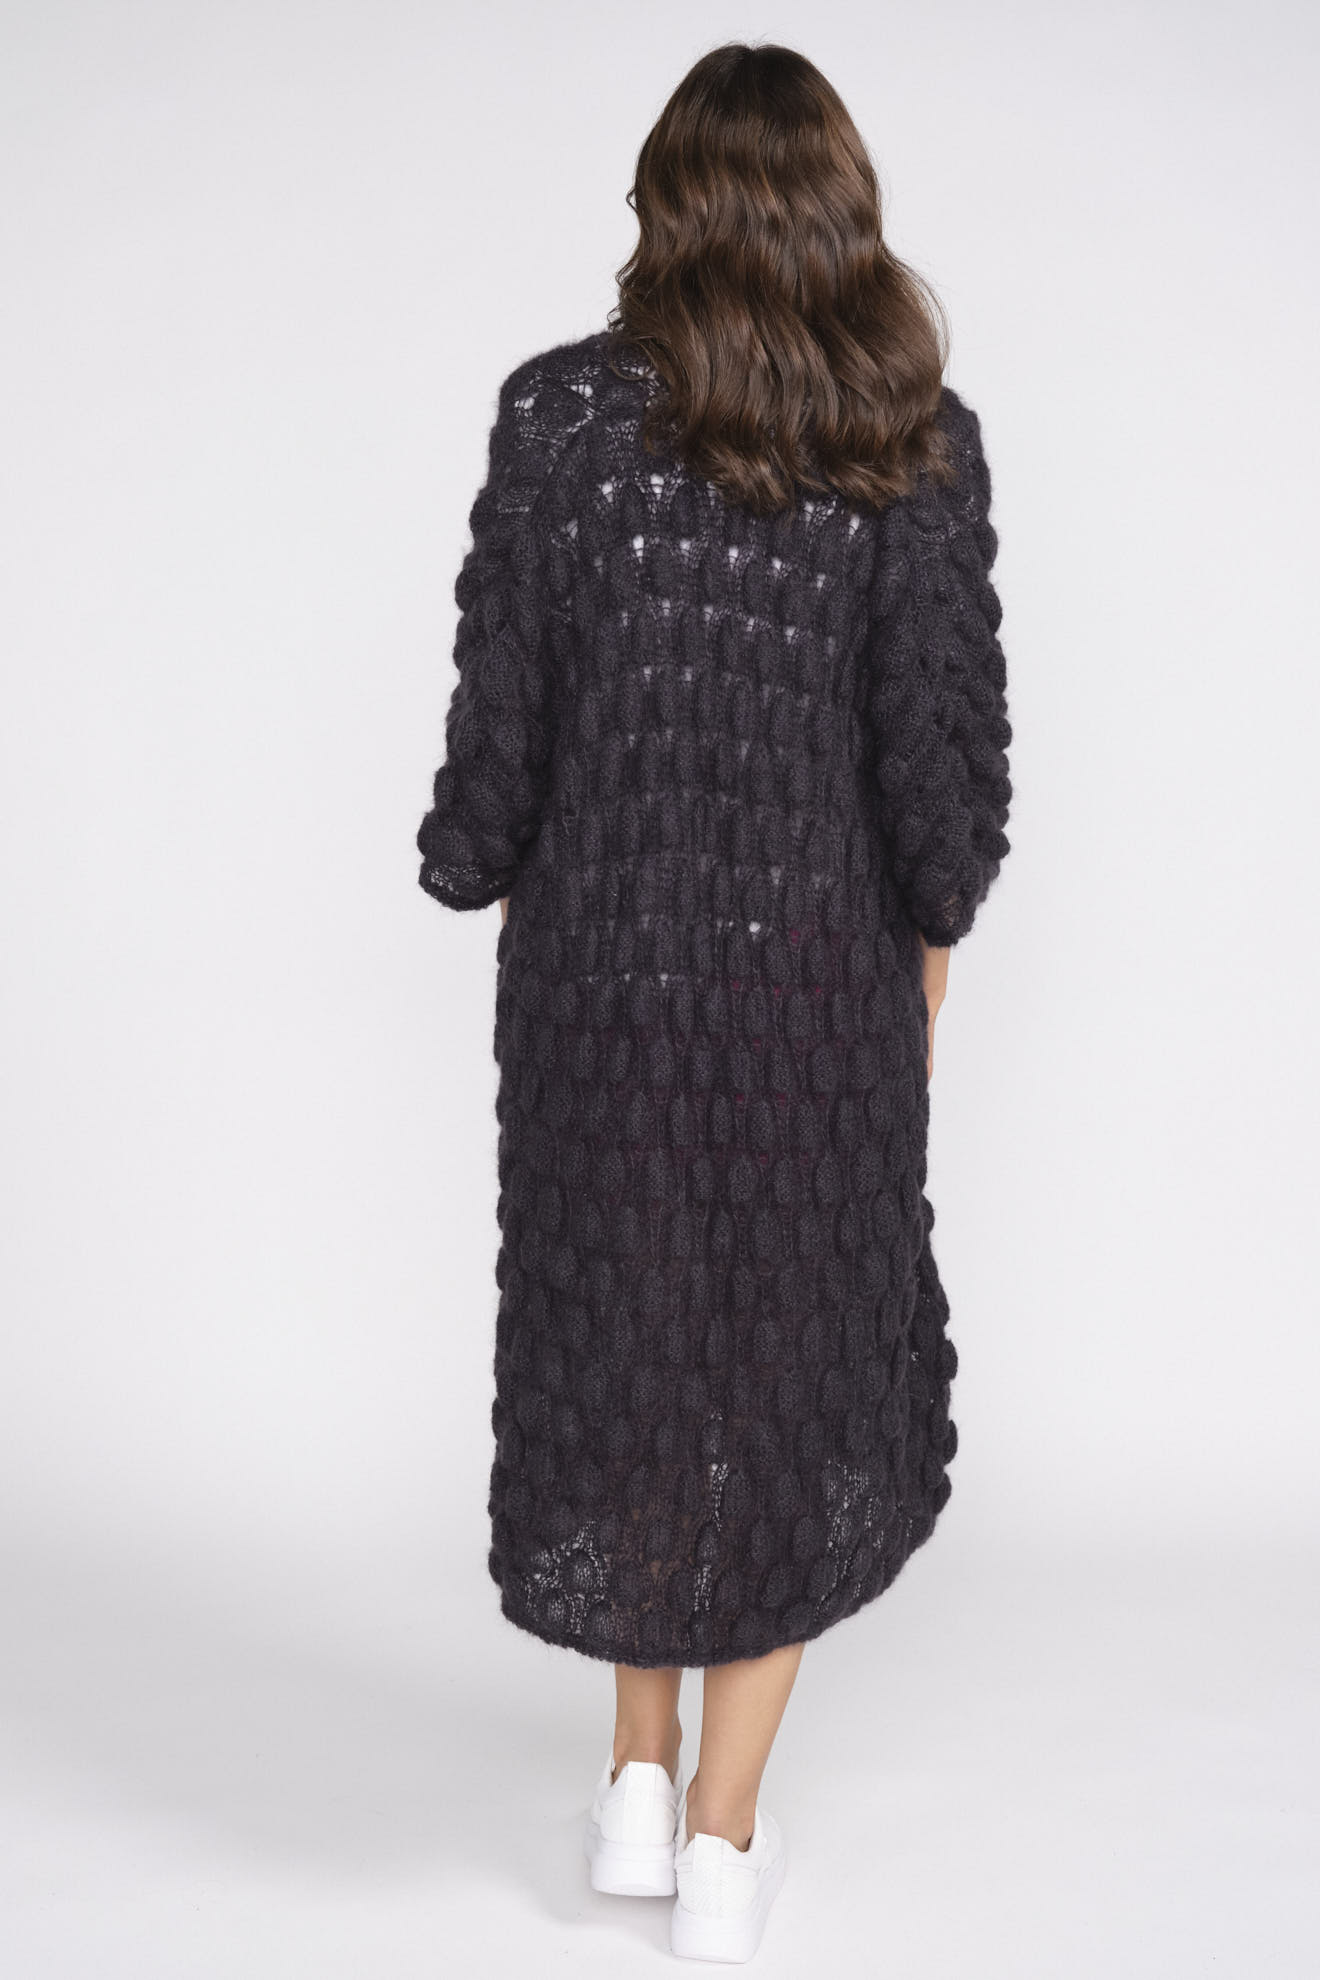 Letanne Emma Aline Lace Vest - Angora wool cardigan short sleeve black